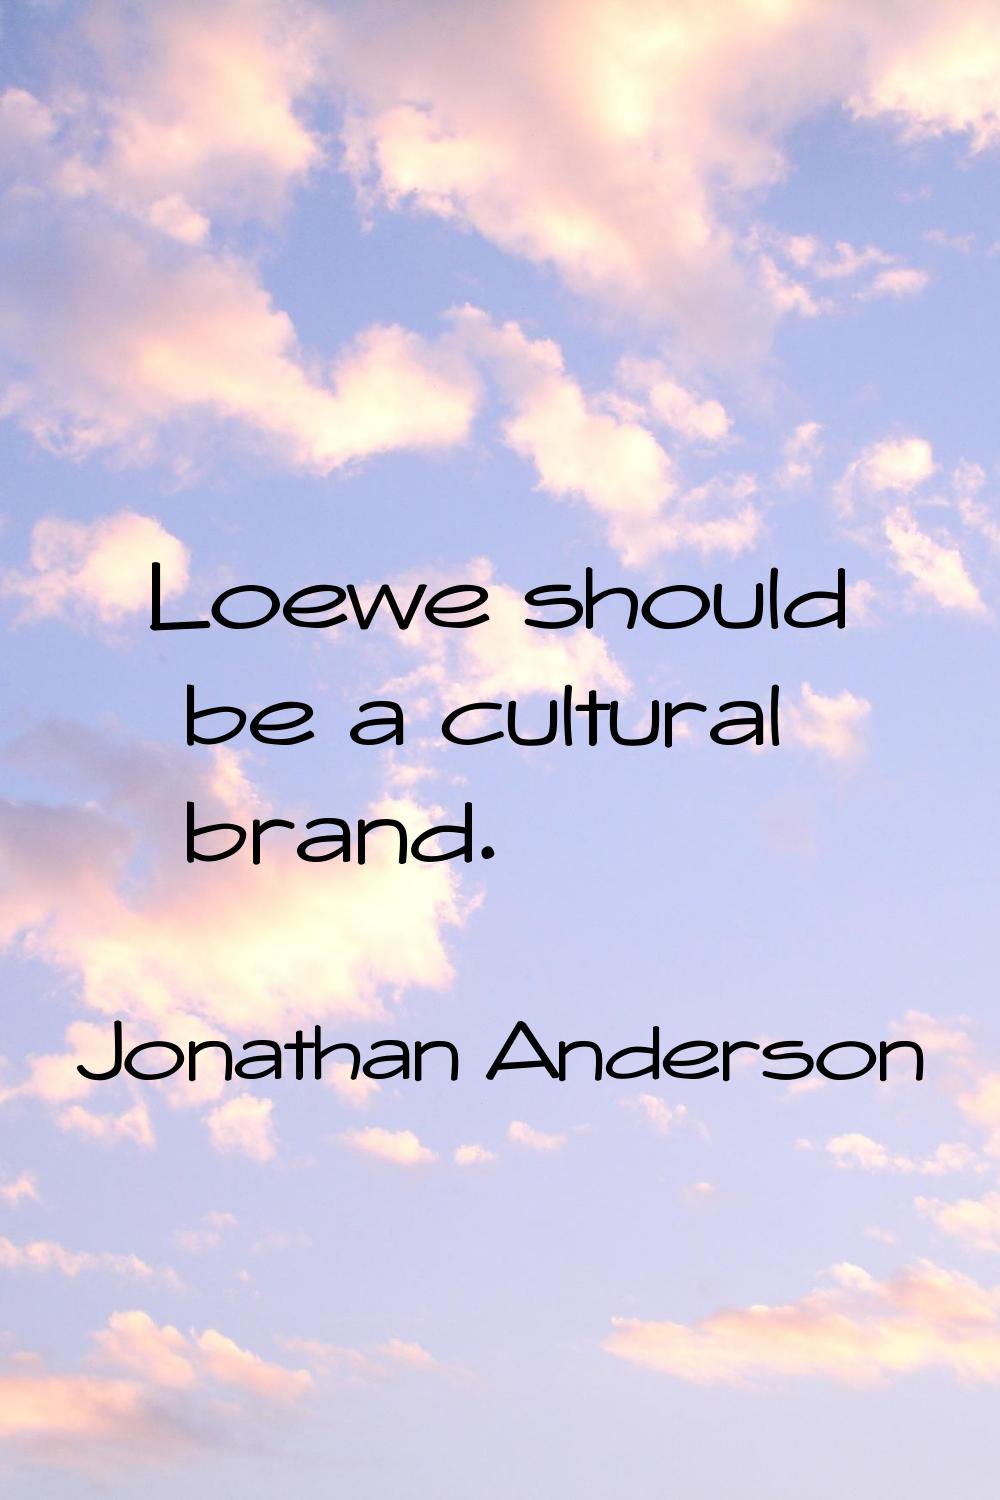 Loewe should be a cultural brand.